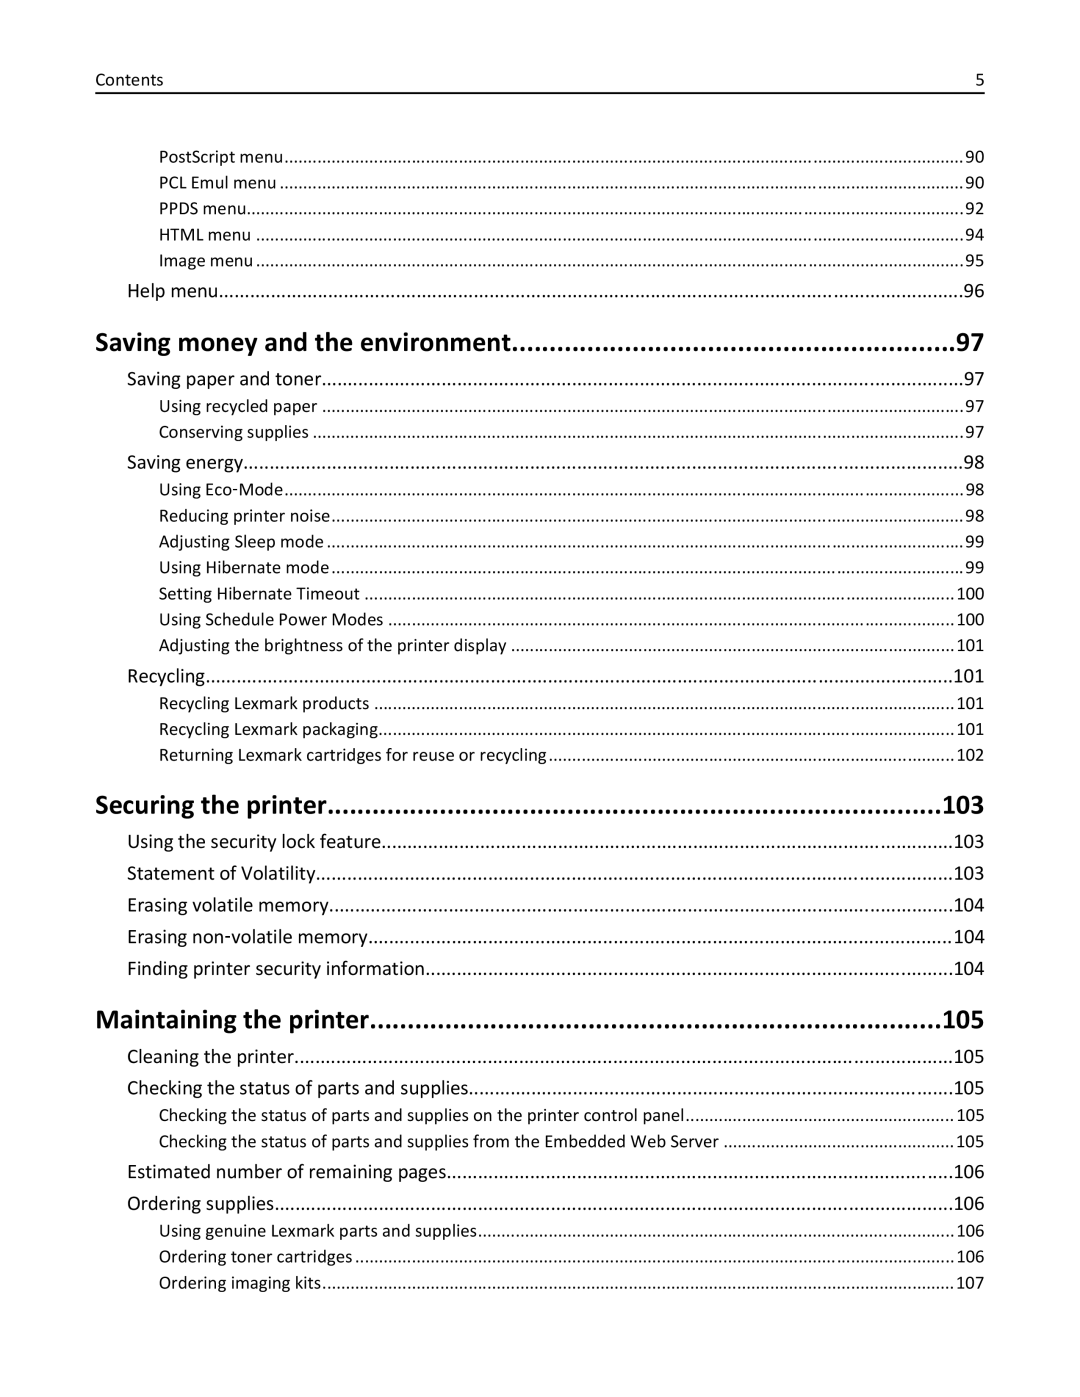 Lexmark CS410 manual Saving money and the environment, Securing the printer 103, Maintaining the printer 105 